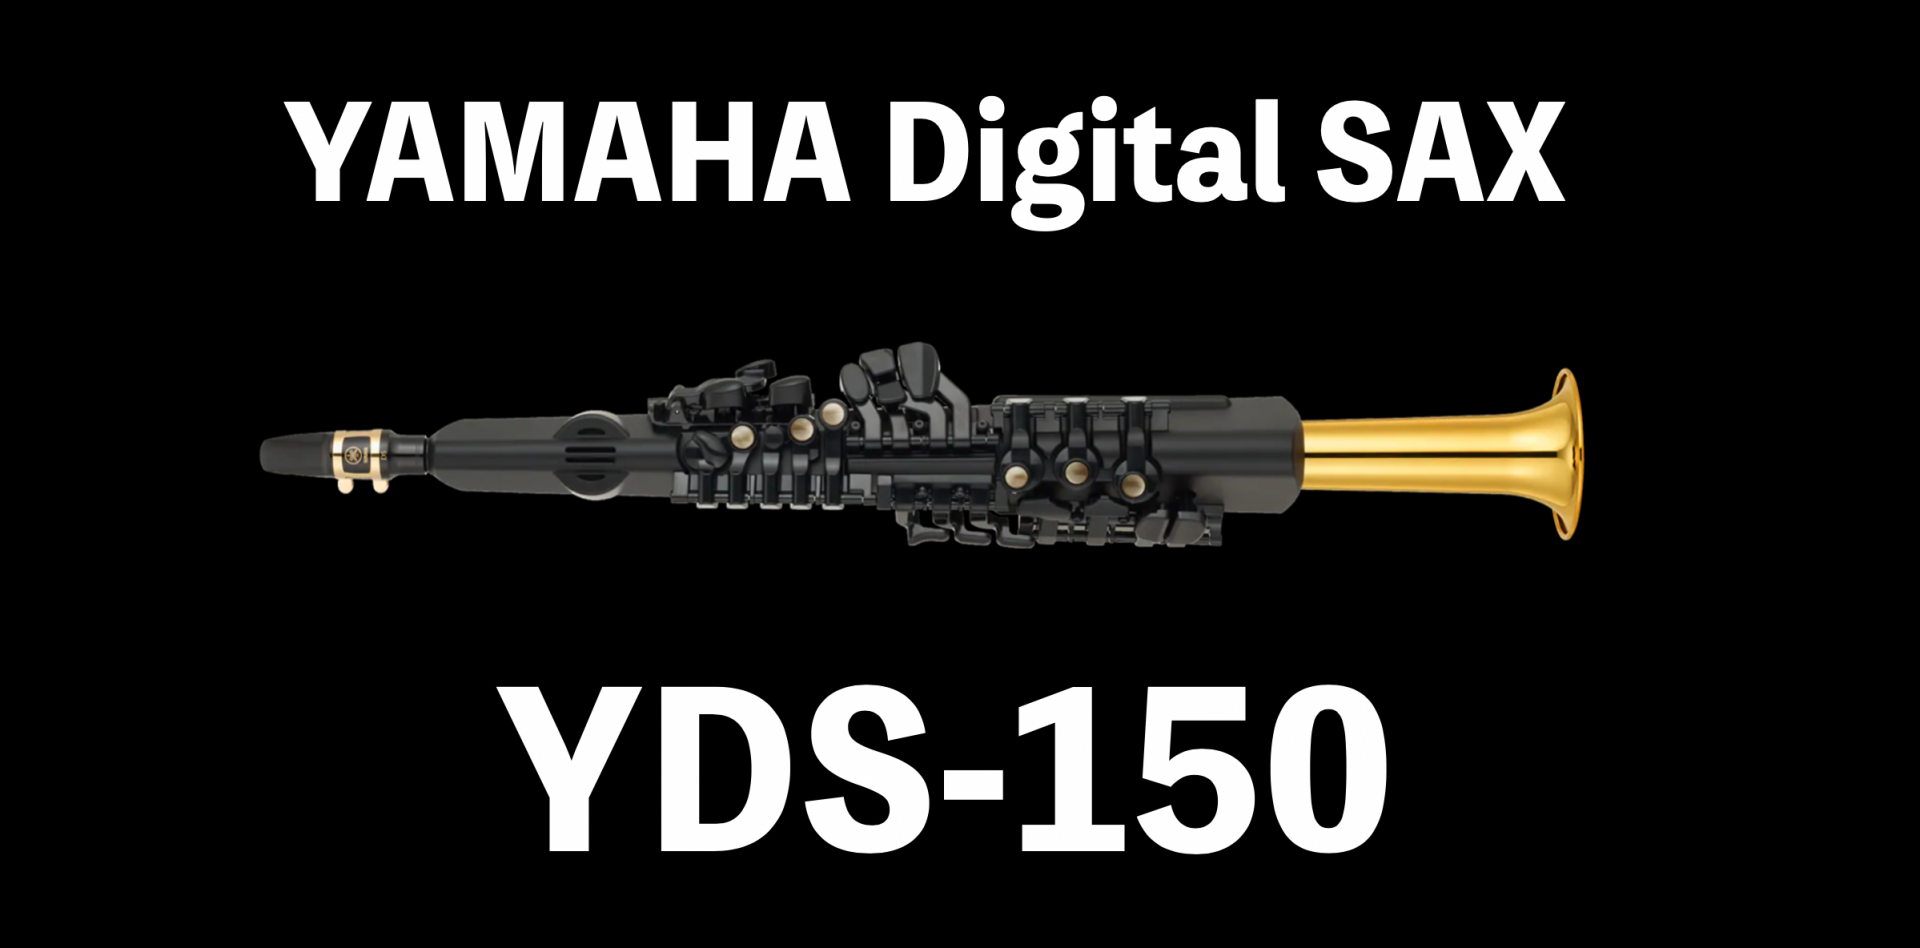 YAMAHAデジタルサックスYDS-150が日本上陸！予約受付中！